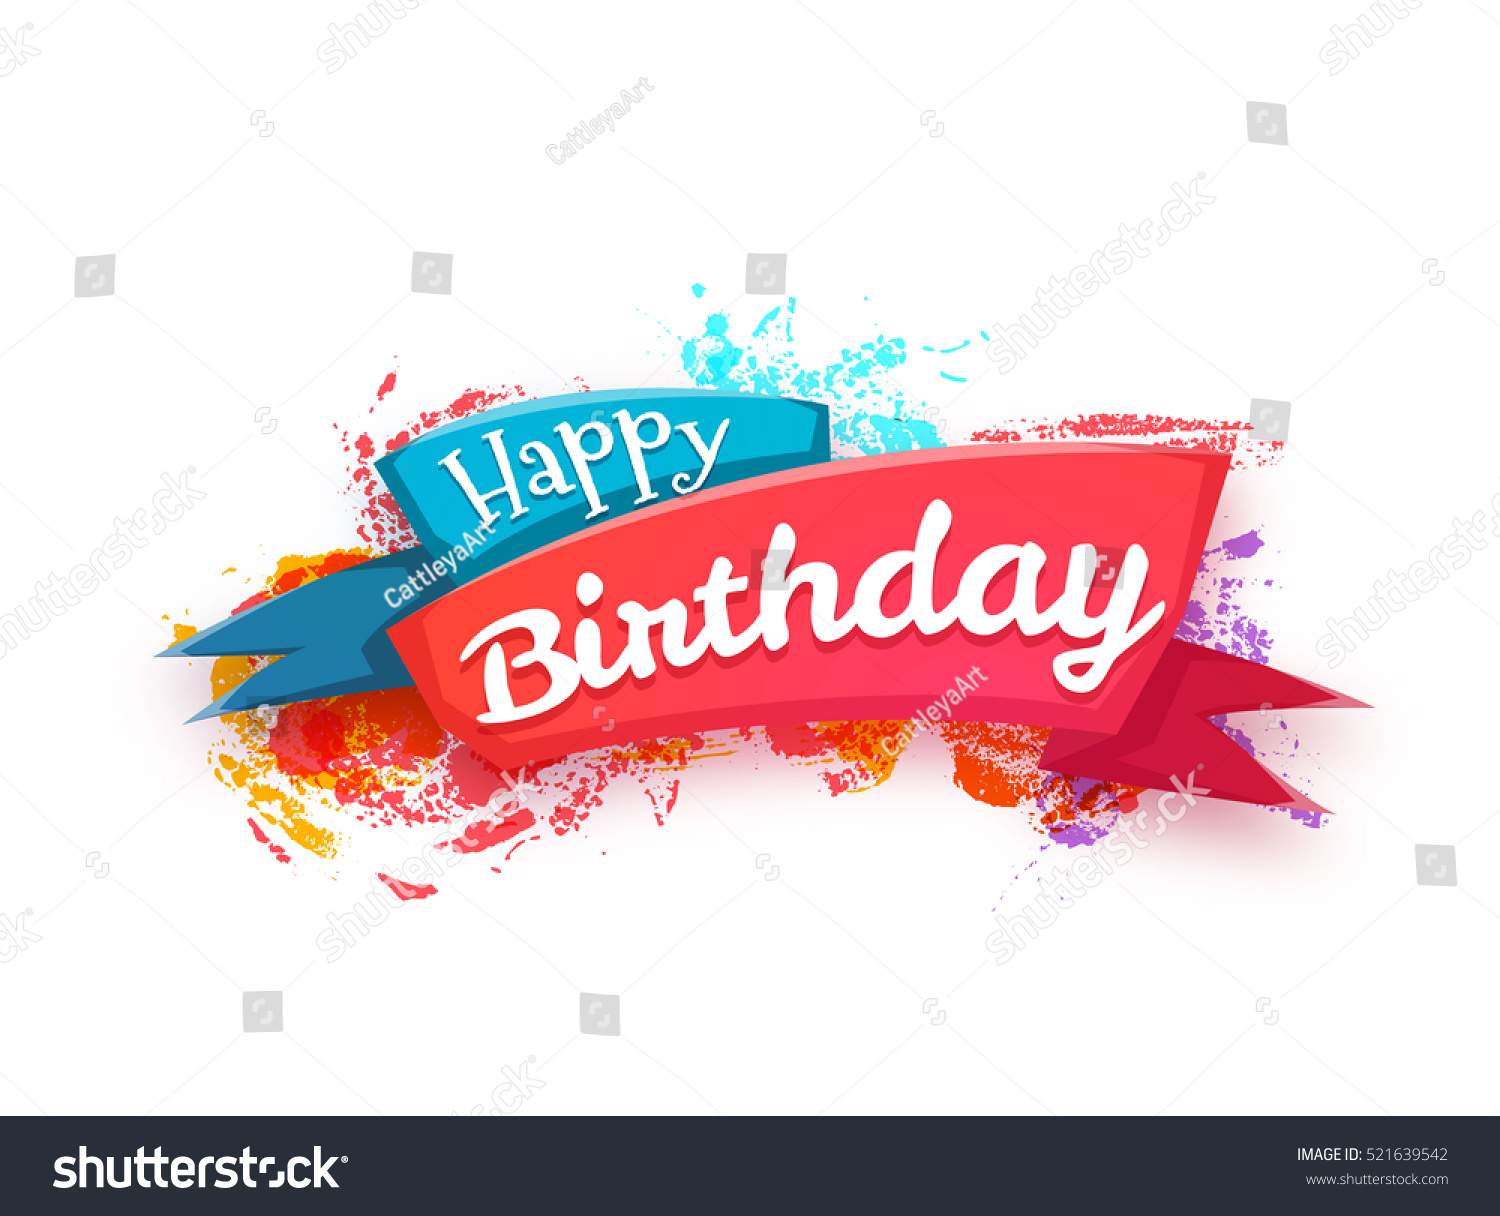 Download Vector Illustration Ribbon Happy Birthday Title Stock Vector 521639542 - Shutterstock